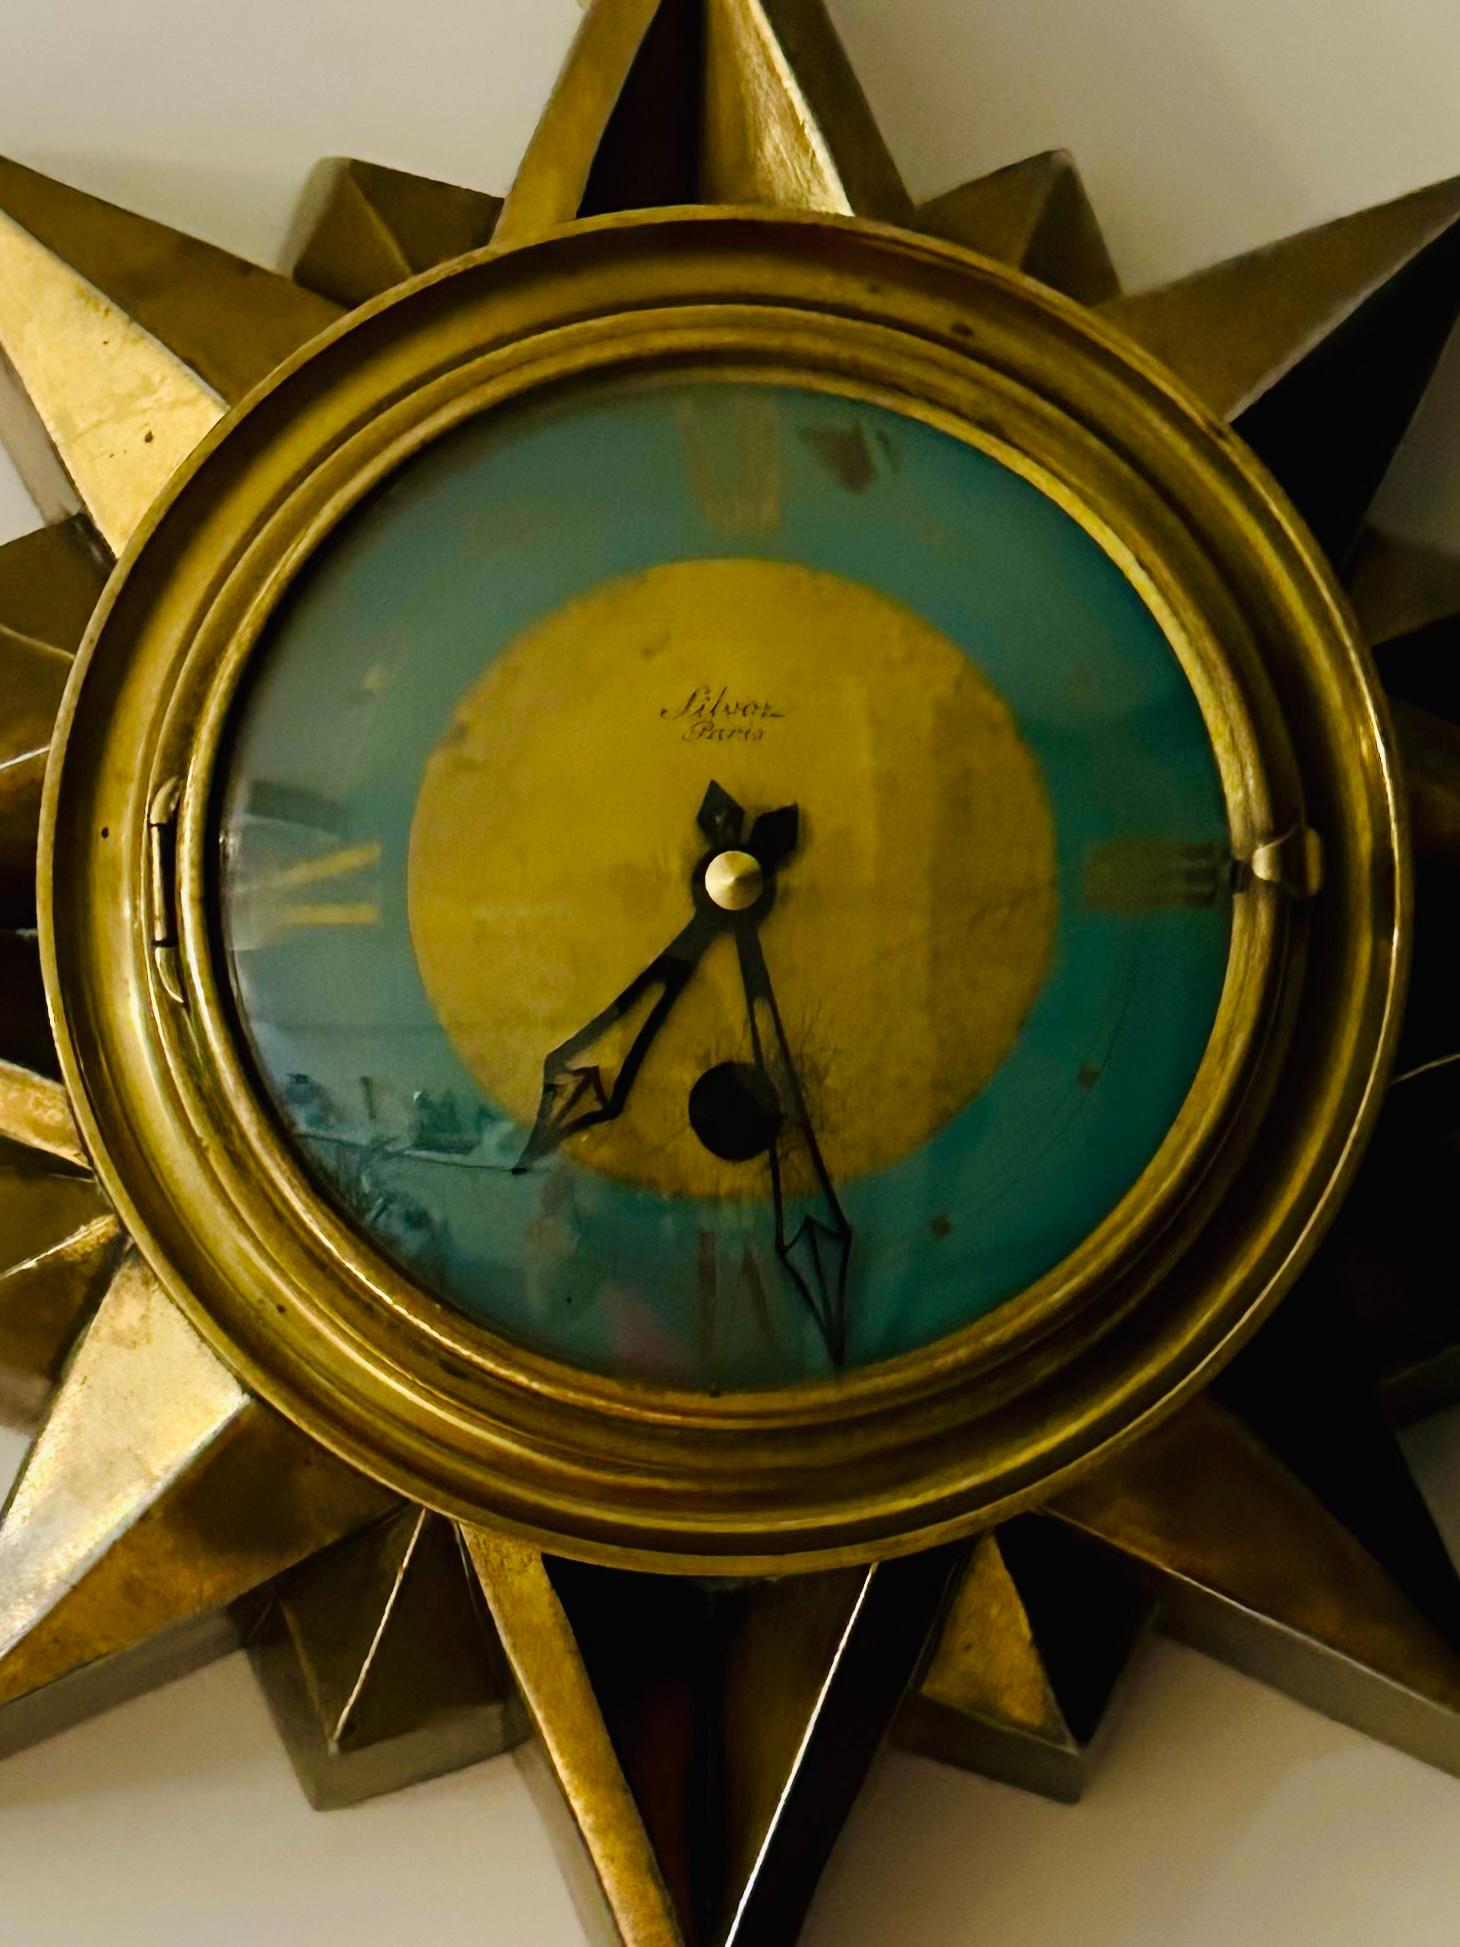 1930s French Art Deco 'Cartel Silvoz Paris' Sunburst Brass Wall Hanging Clock For Sale 4